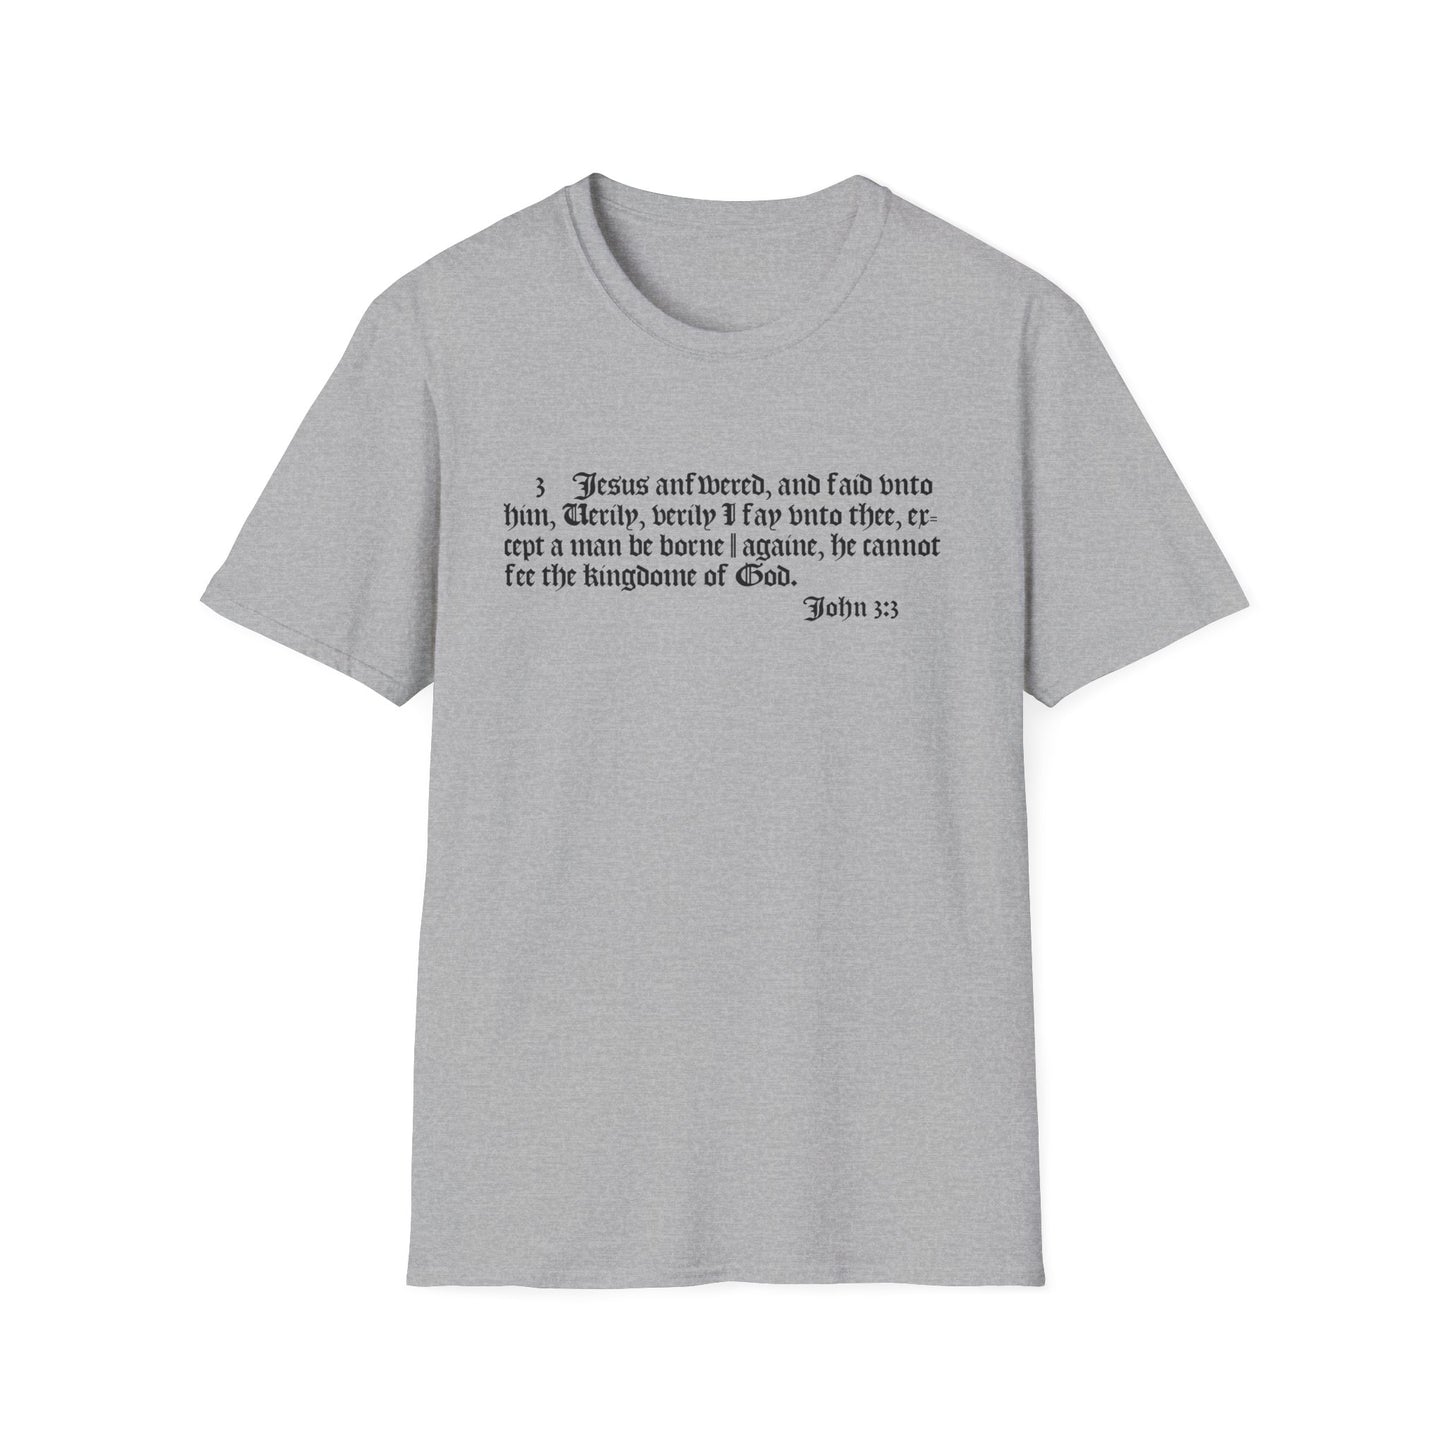 Unisex Softstyle T-Shirt with 1611 KJV Bible Verse John 3:3